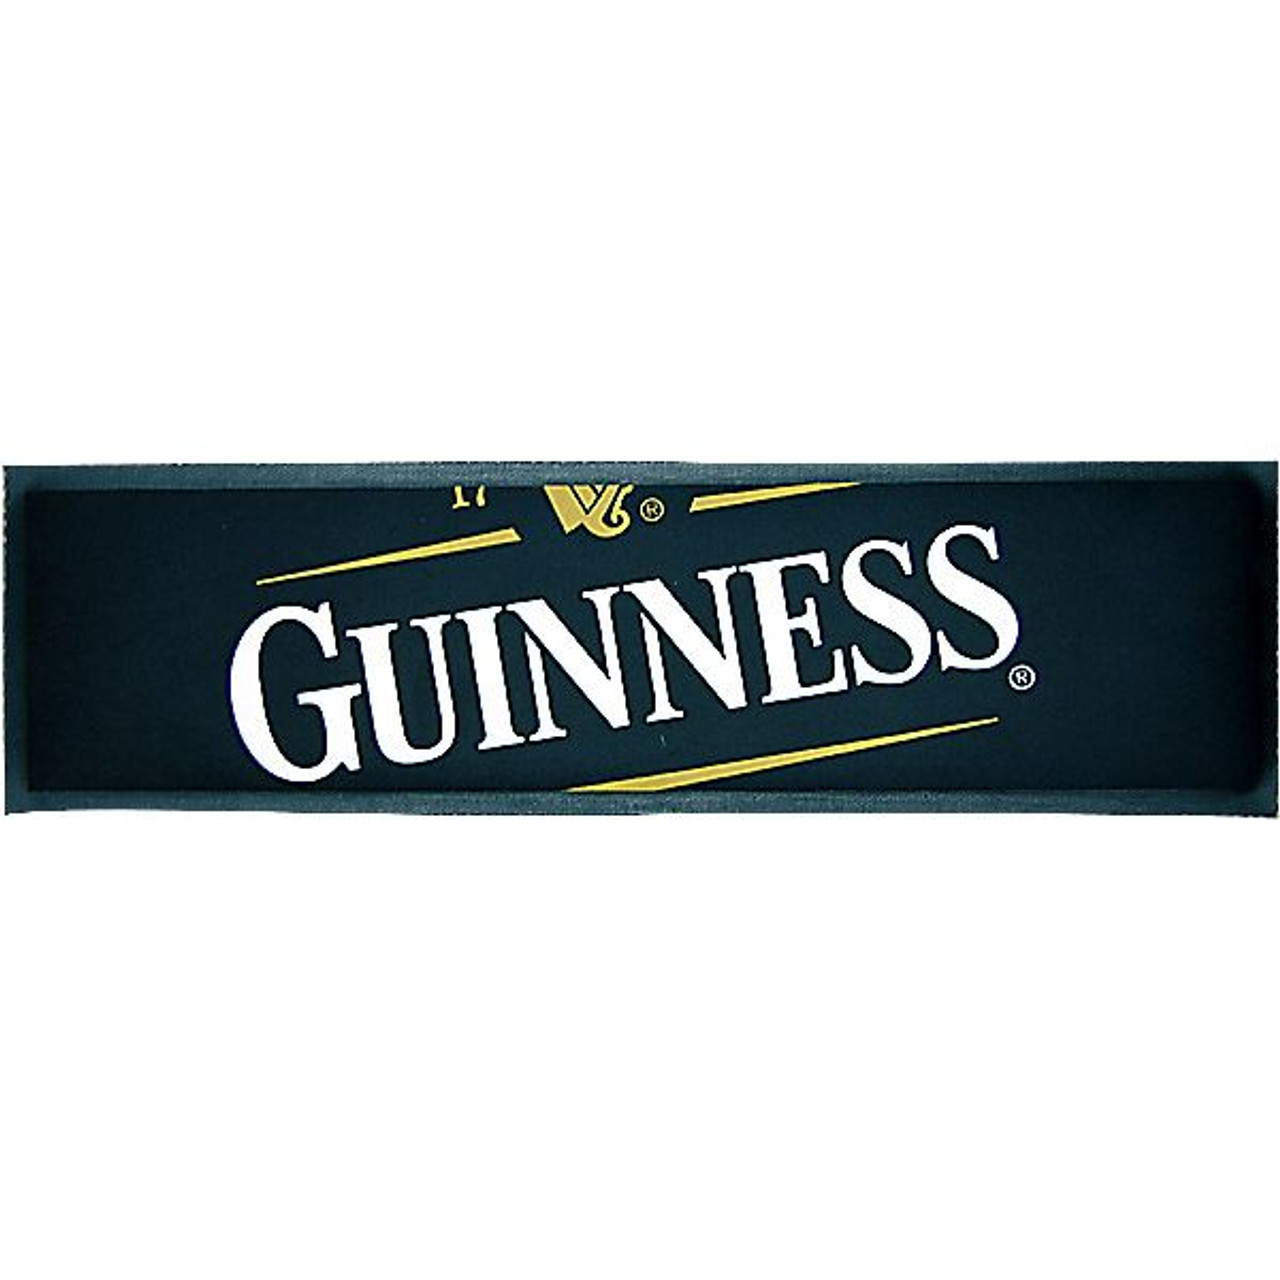 Guinness Pub Beer Man Cave Home Bar Rubber Backed Mat Runner Used 82 cm x 22 cm 